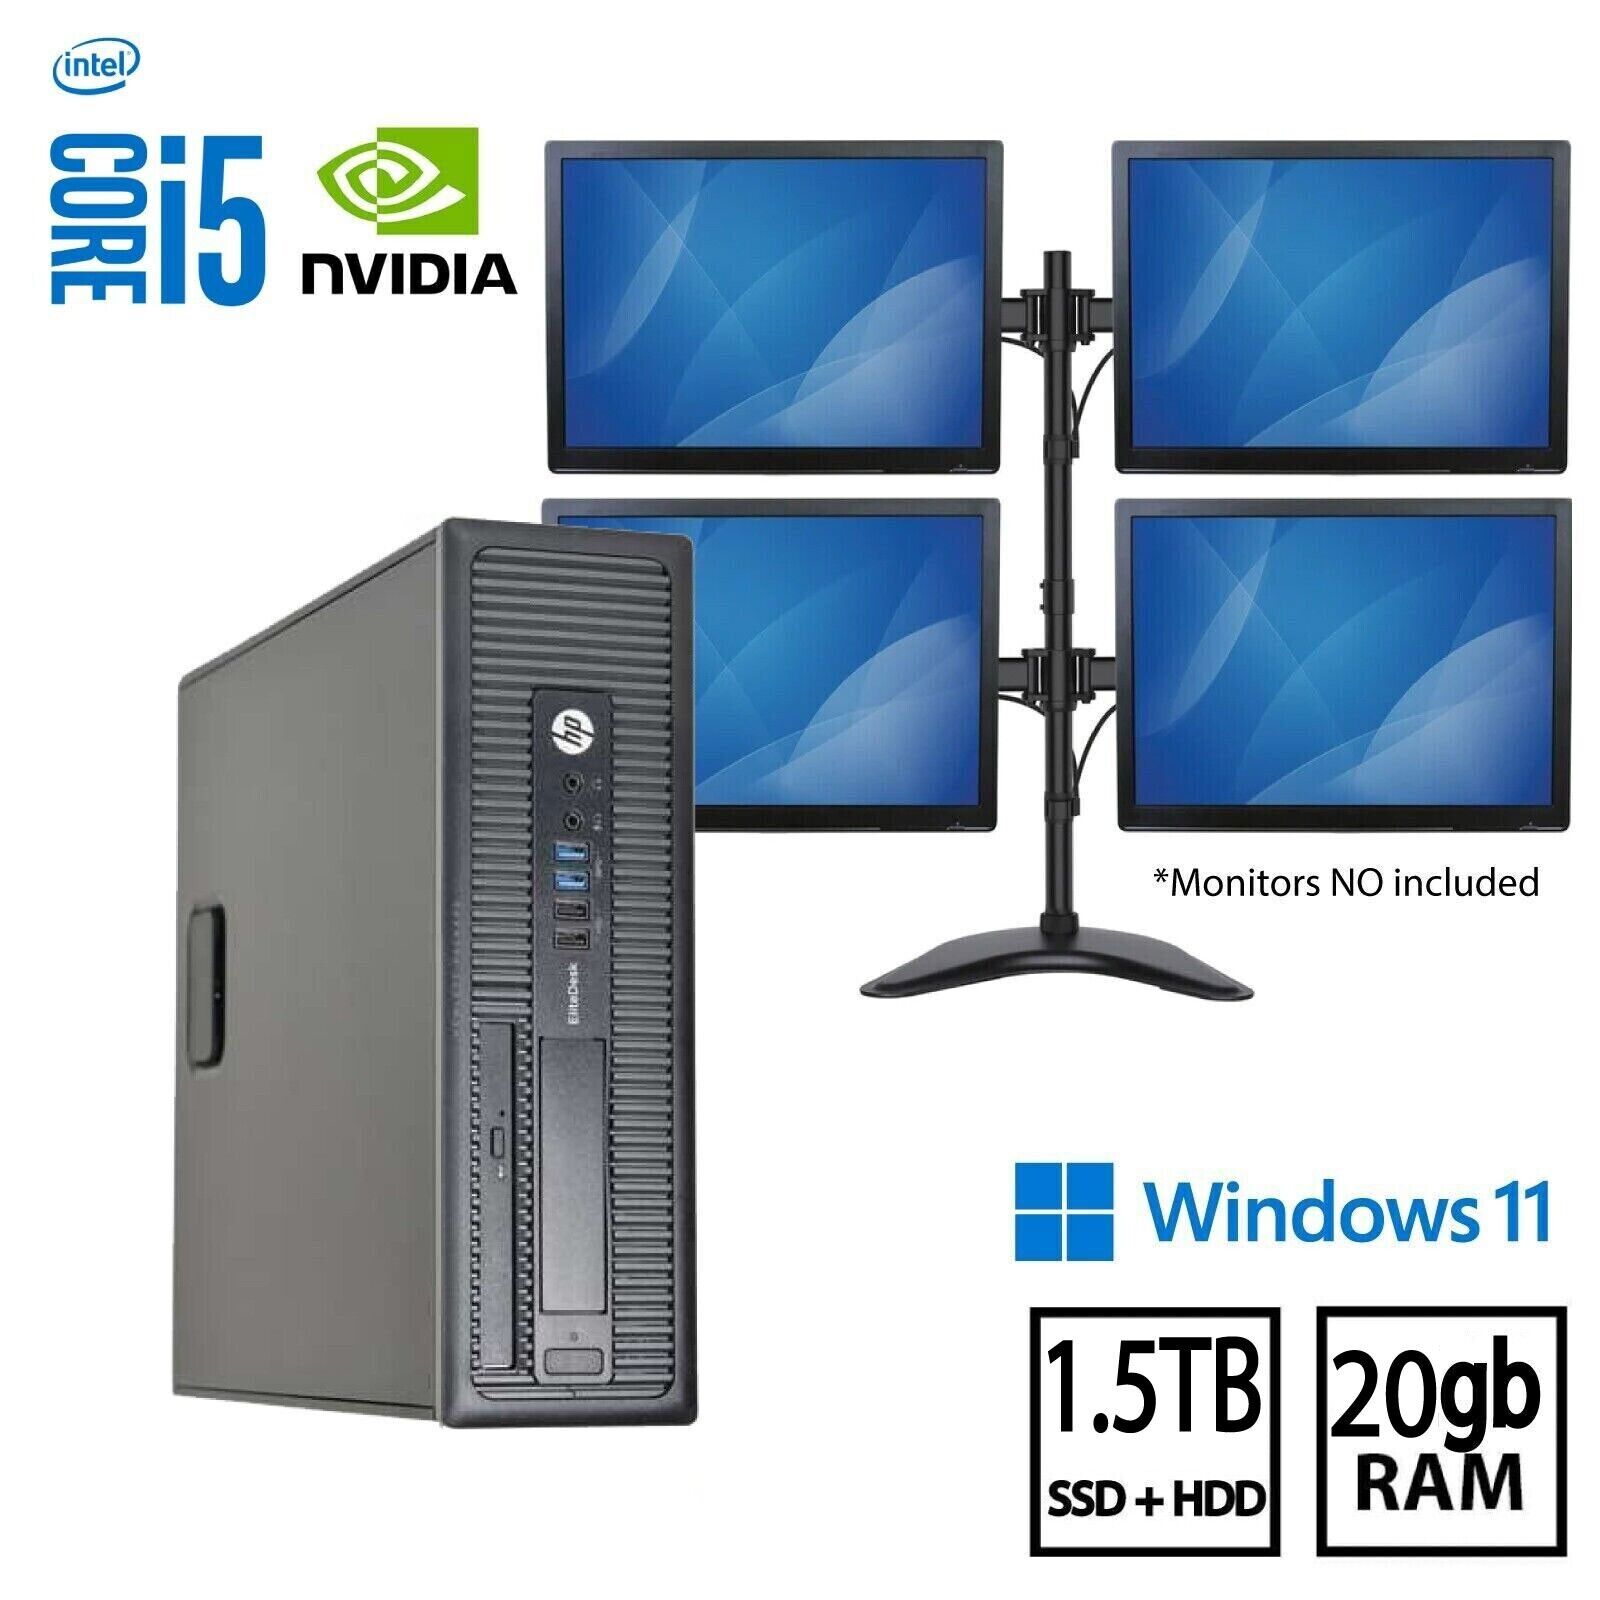 HP TRADING COMPUTER i5 NVIDIA 4k 4M 20GB RAM 1.5TB SSD+HDD WINDOWS 11 CLEARENCE